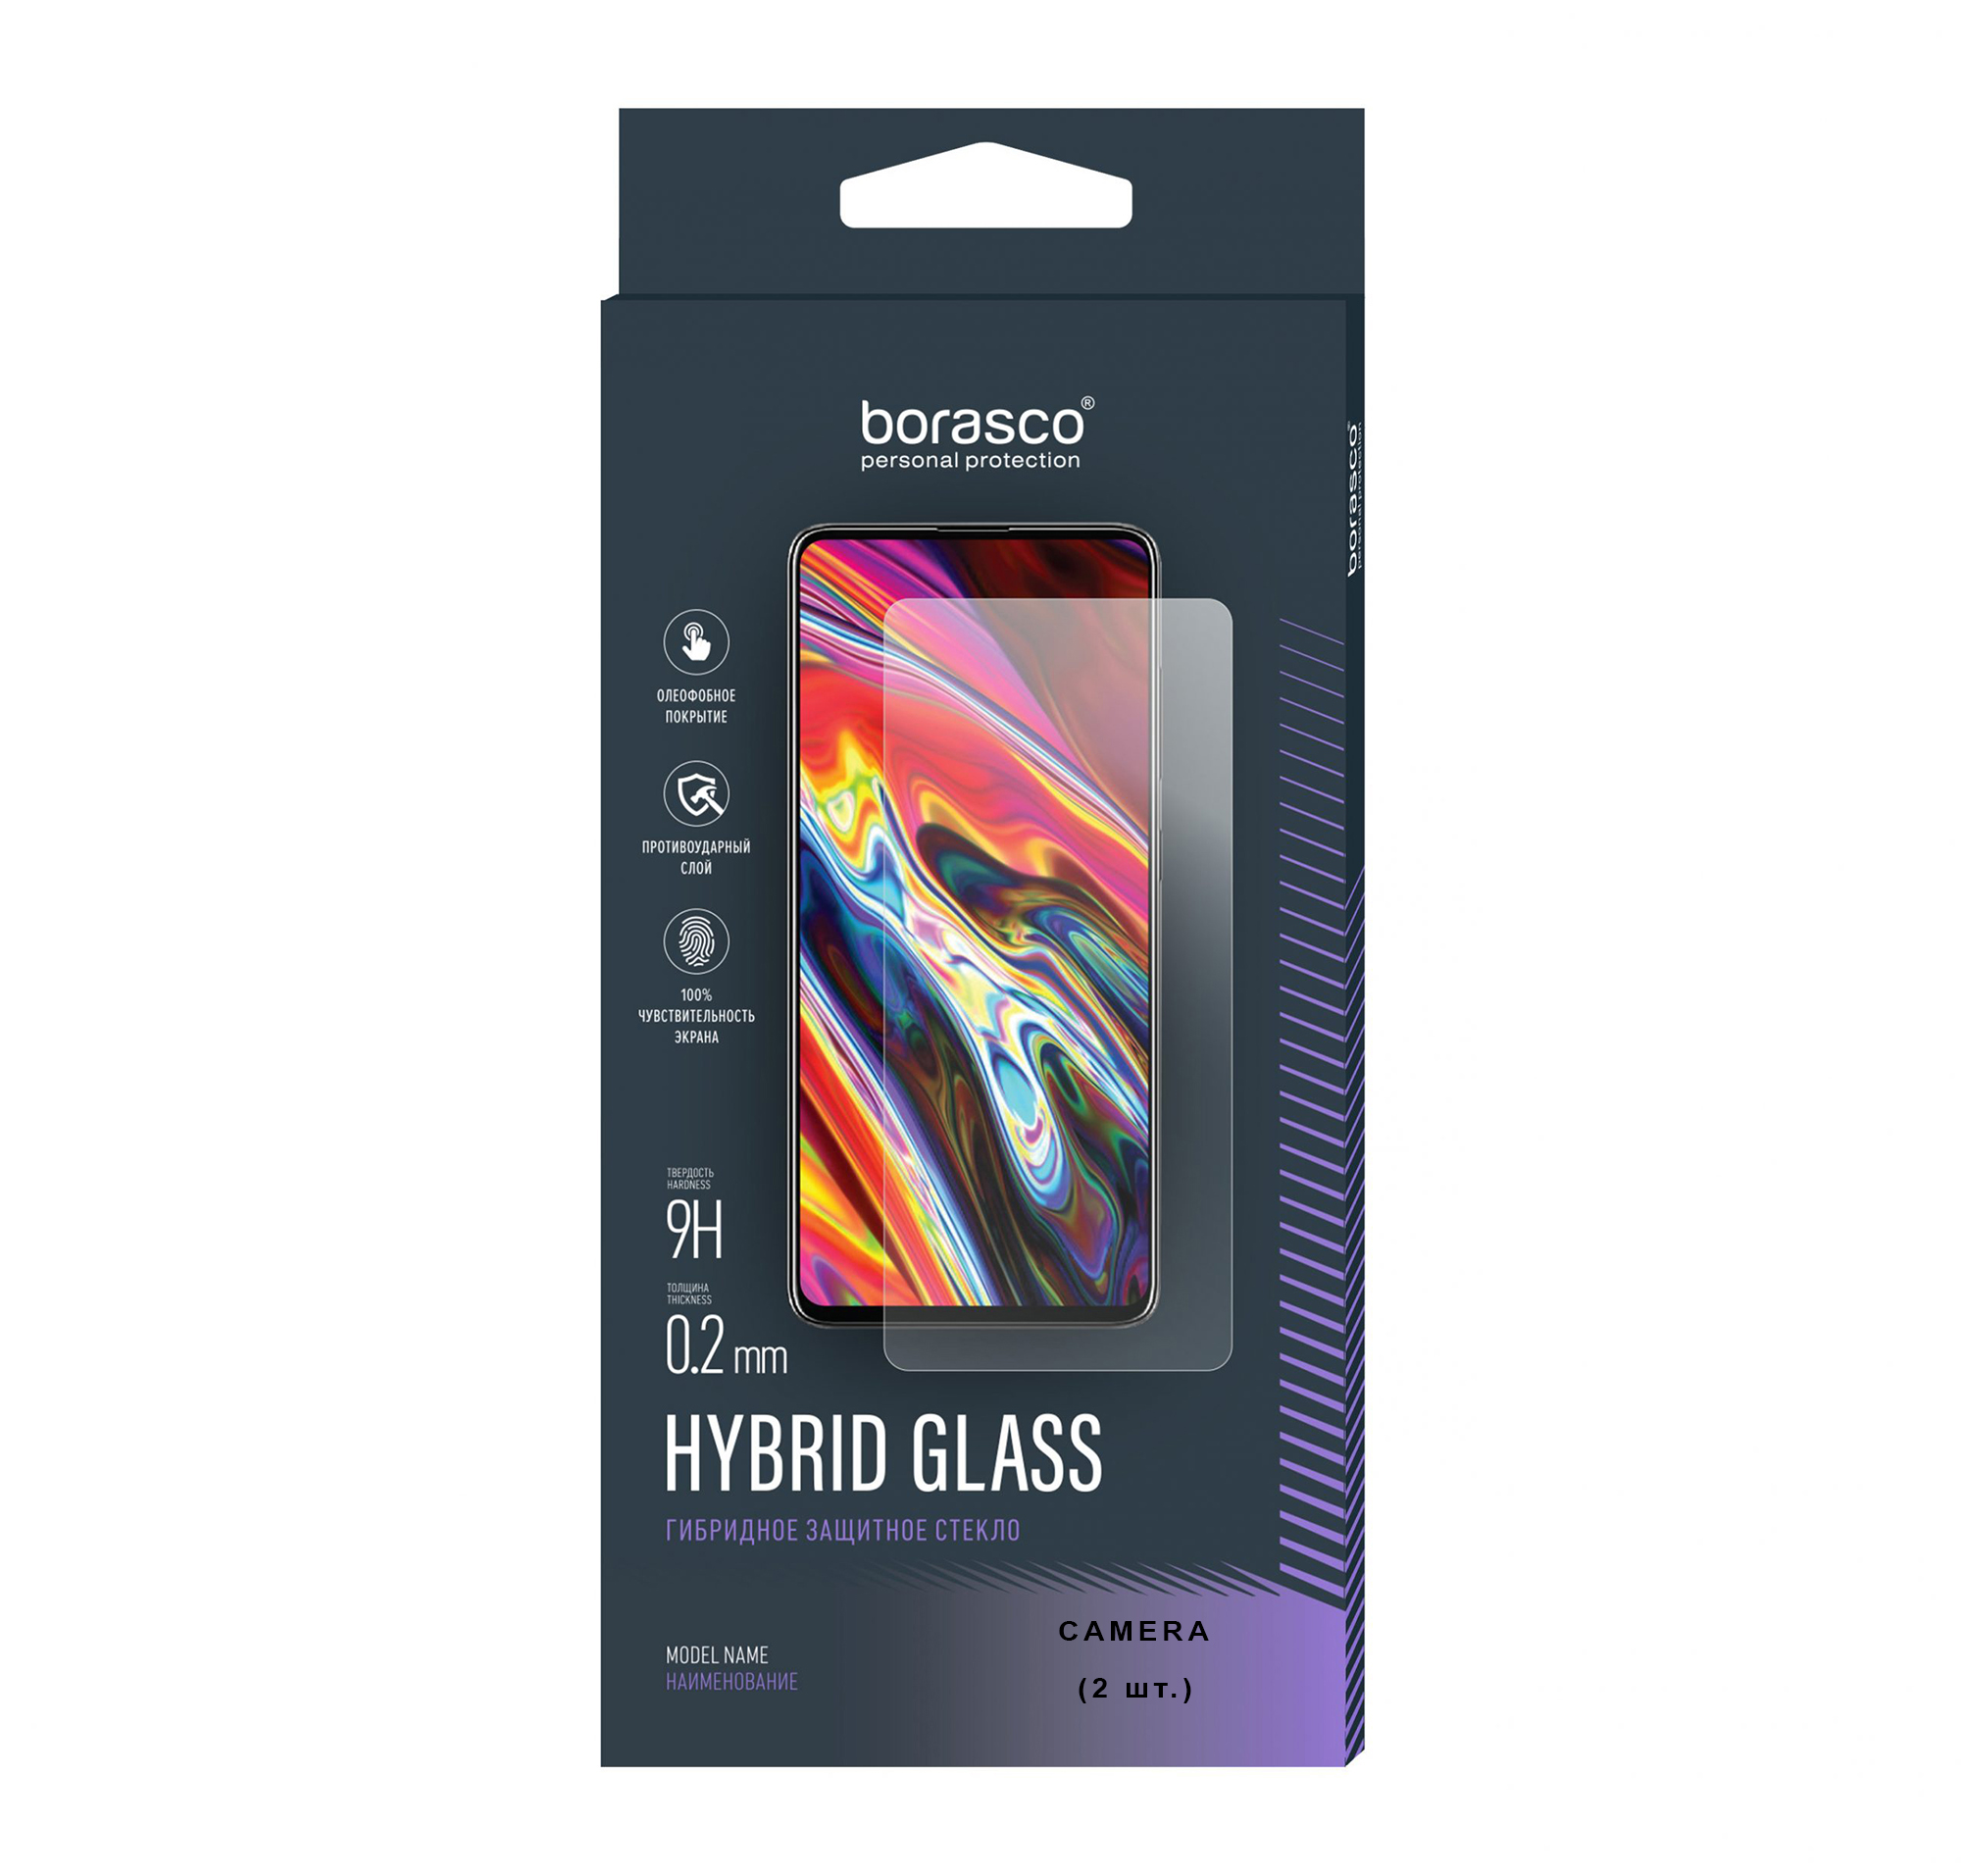 Защитное стекло (Экран+Камера) Hybrid Glass для Apple Iphone 7 Plus/ 8Plus защитное стекло для apple iphone 7 8 plus low cost